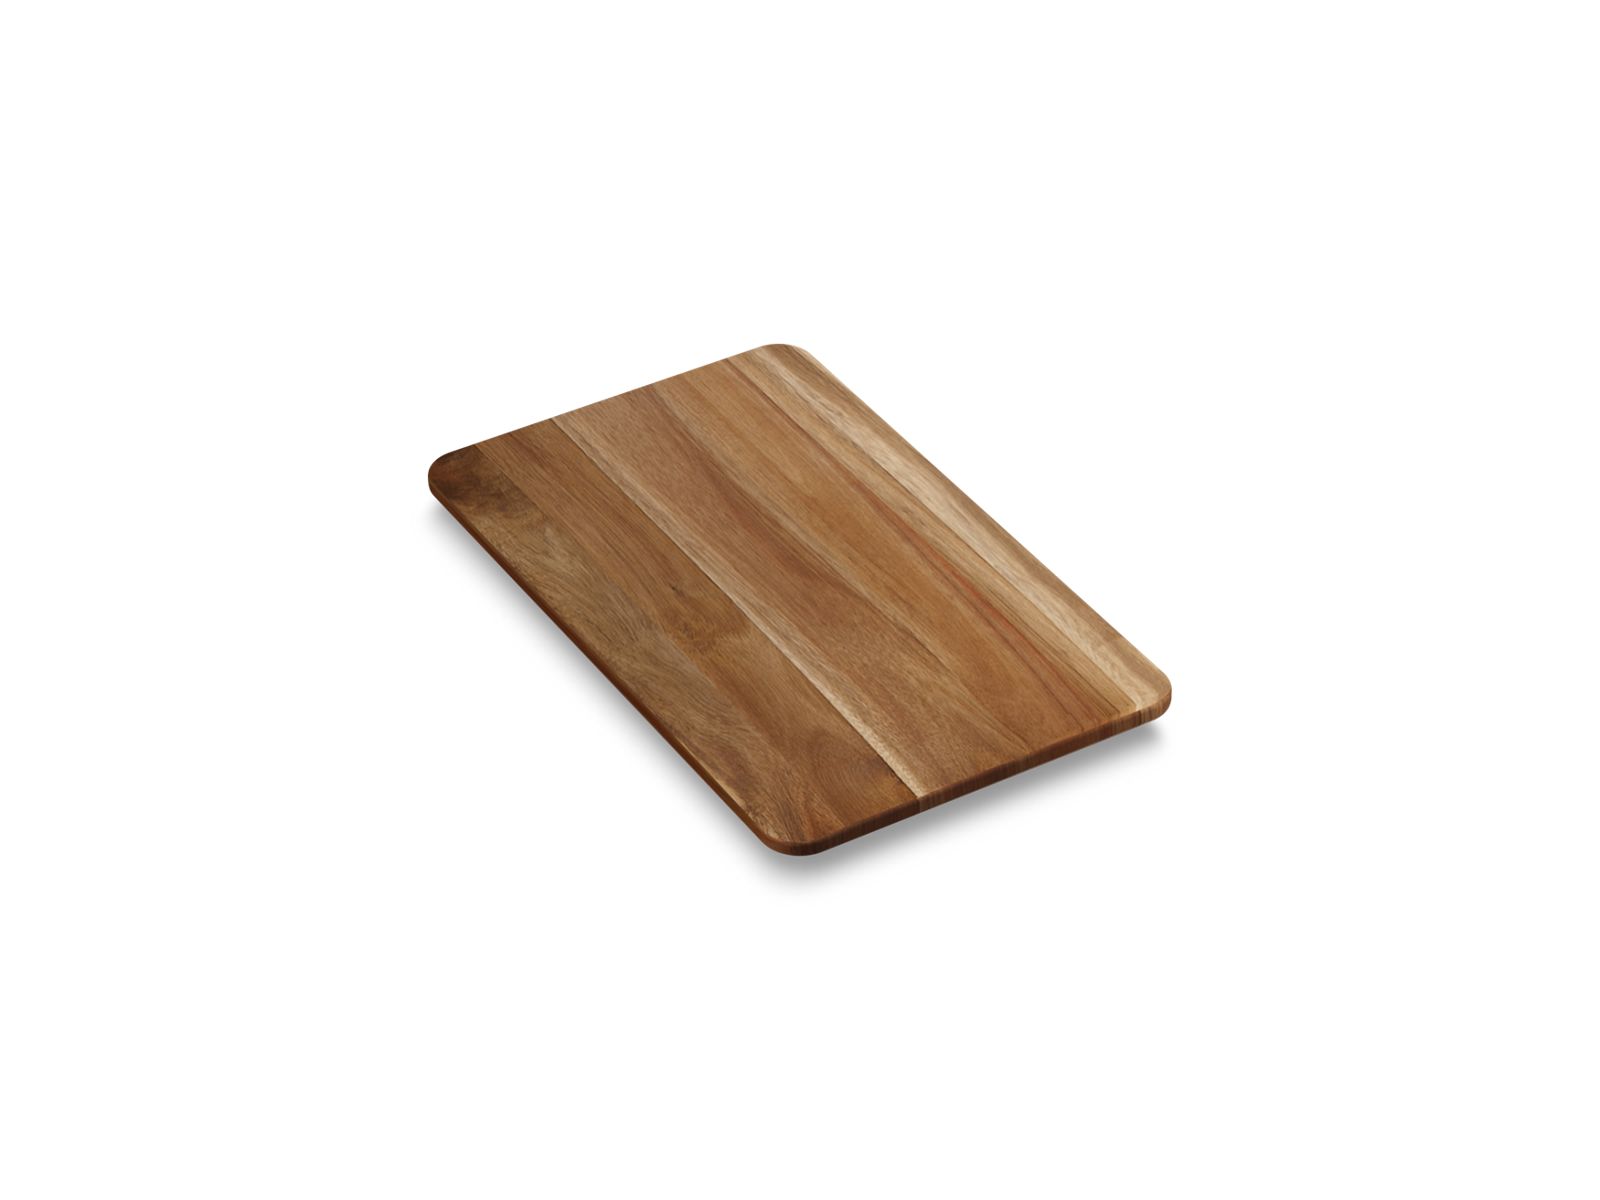 KOHLER K-28906 Acacia cutting board